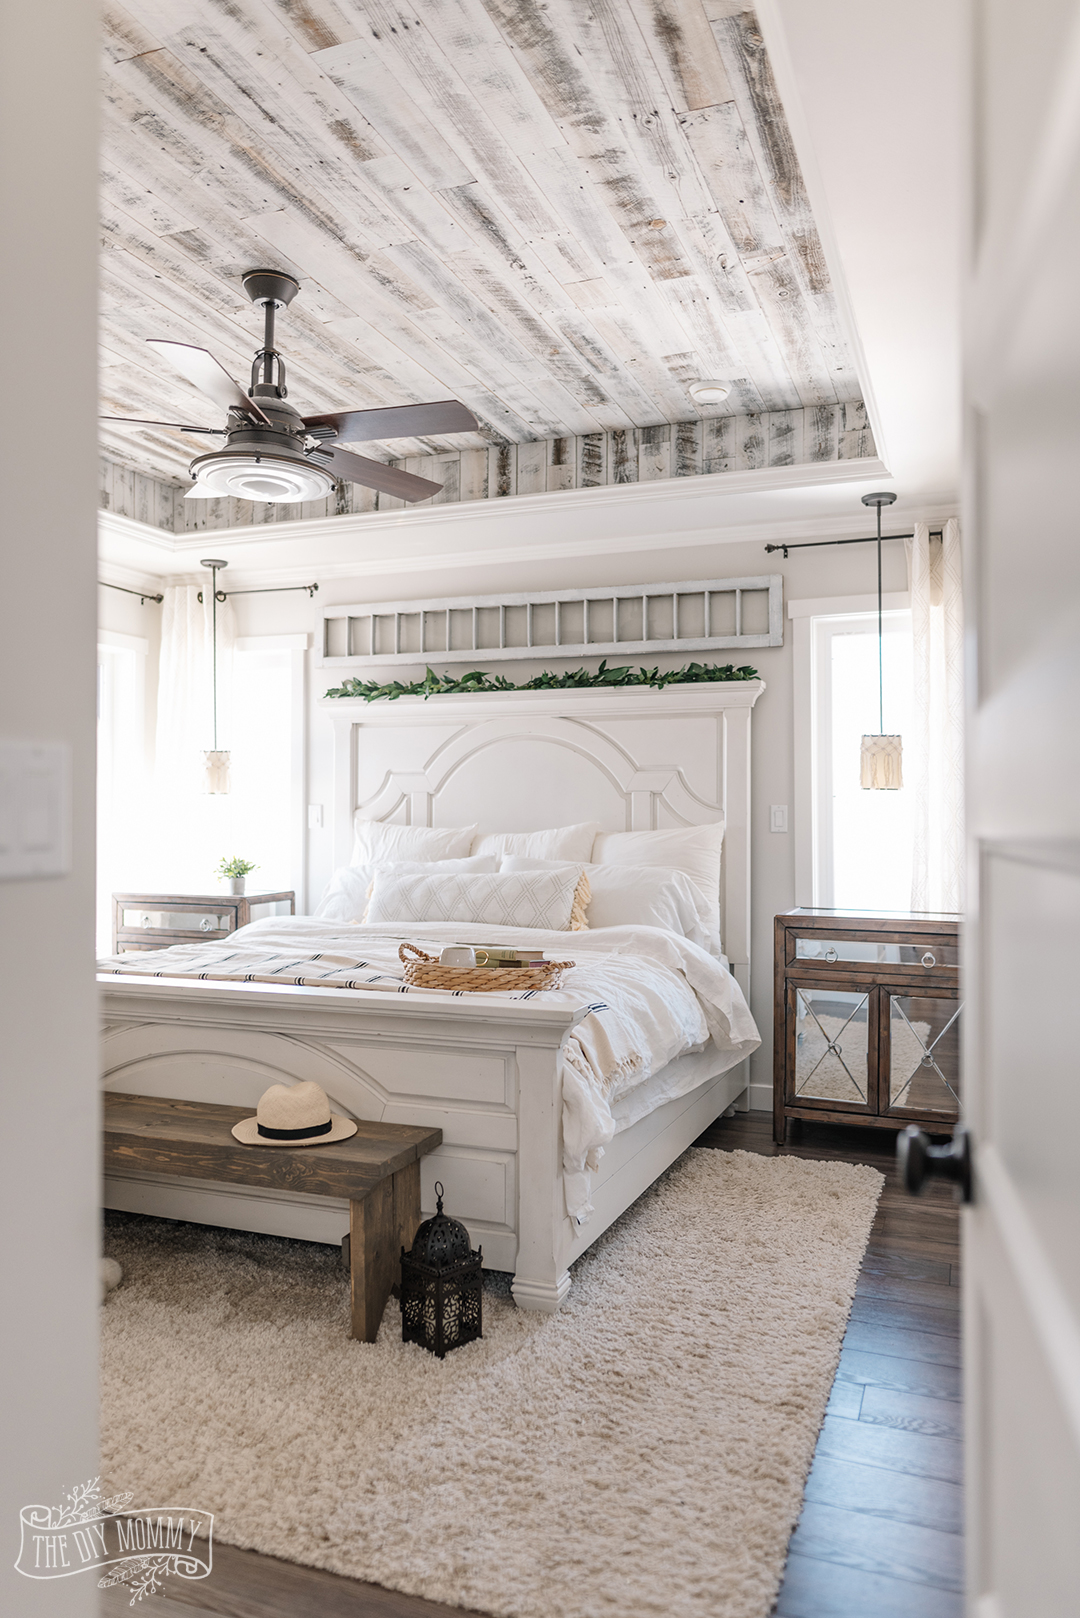 Boho farmhouse master bedroom decor ideas on a budget